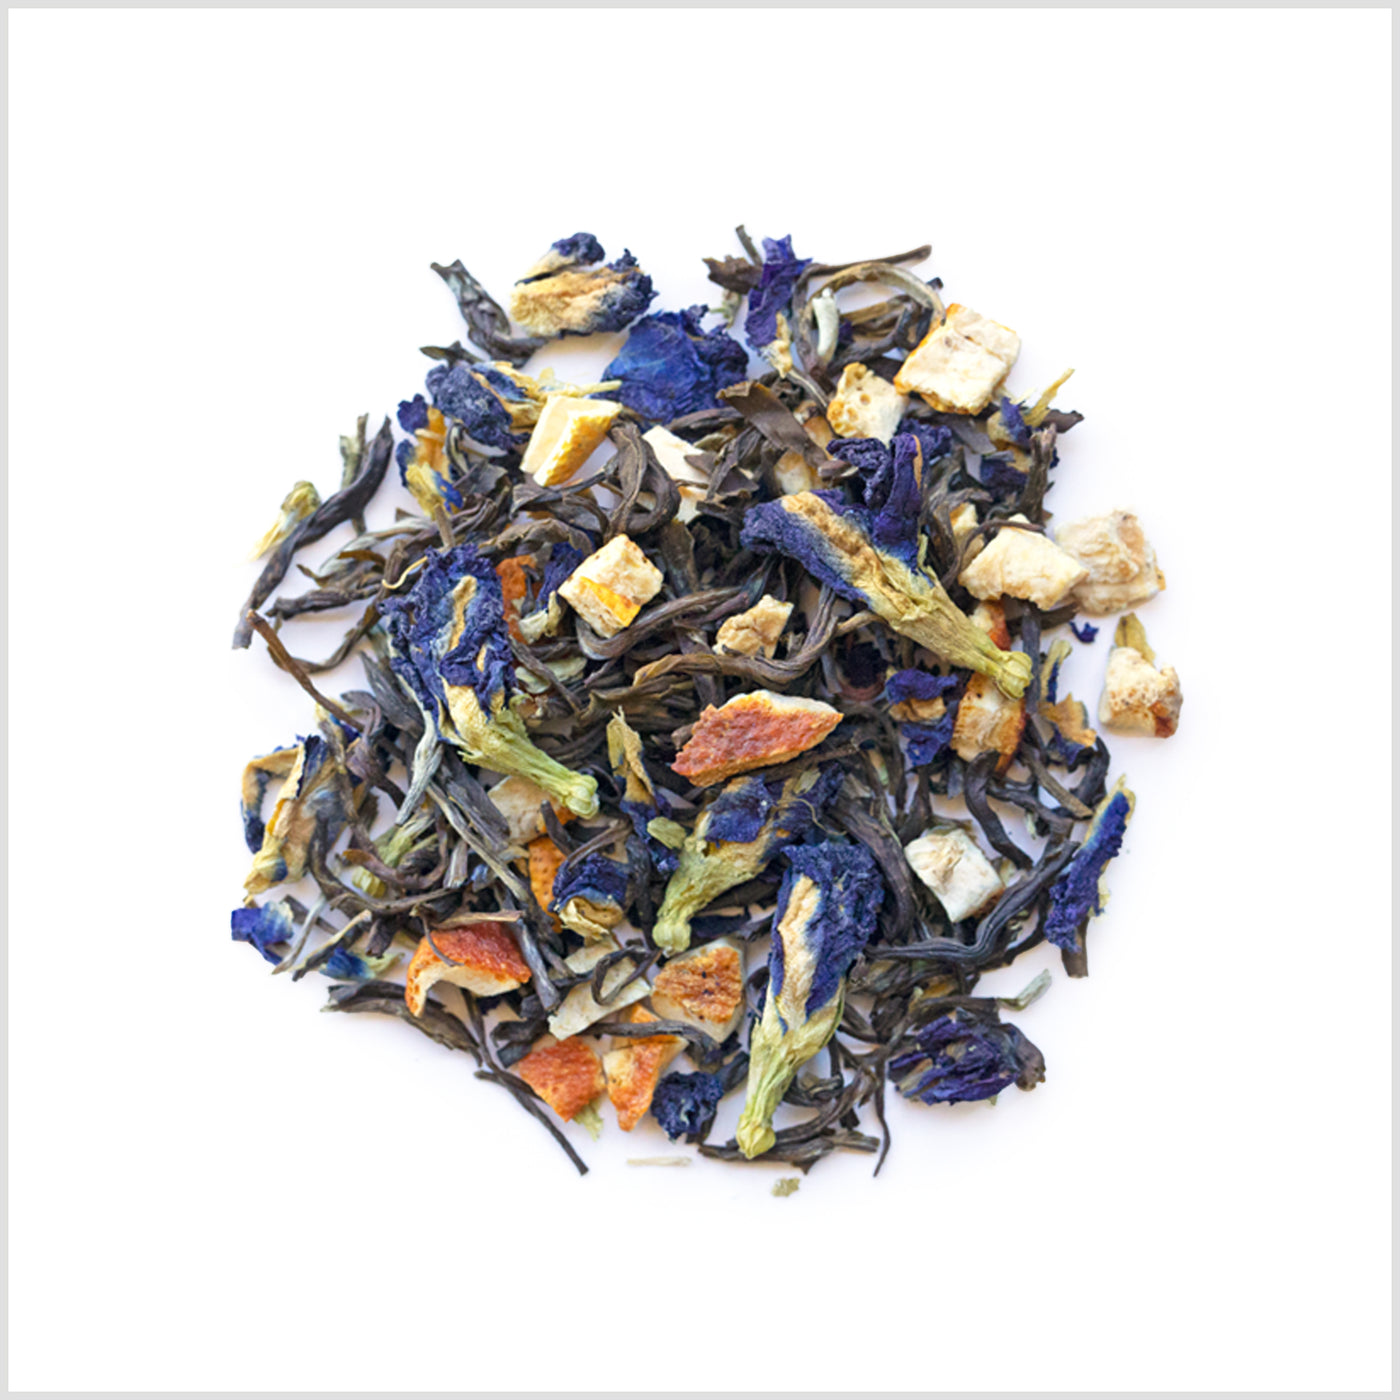 Pile of Blackberry Jasmine loose tea featuring blue butterfly pea flowers, chunks of dried orange peel and jasmine silver tip green tea.